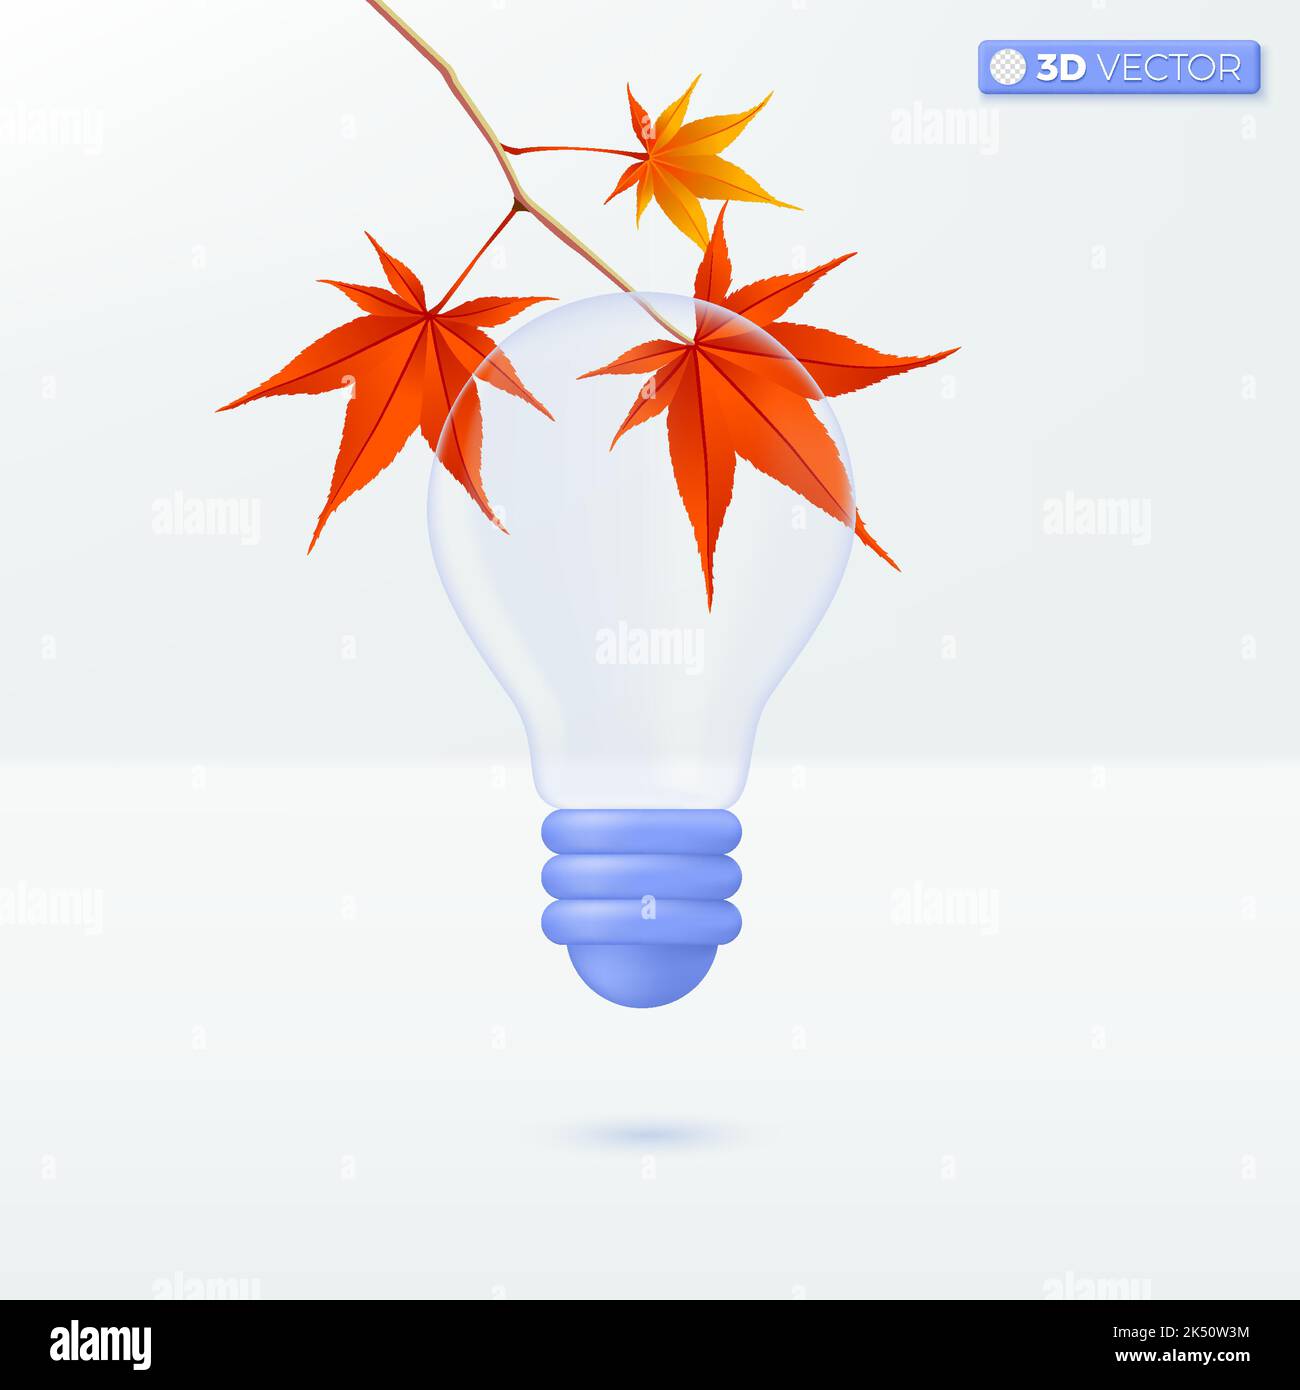 Light bulb transparency and red meple. brainstorm, development, idea icon metaphor. 3D vector isolated illustration design. Cartoon pastel Minimal sty Stock Vector